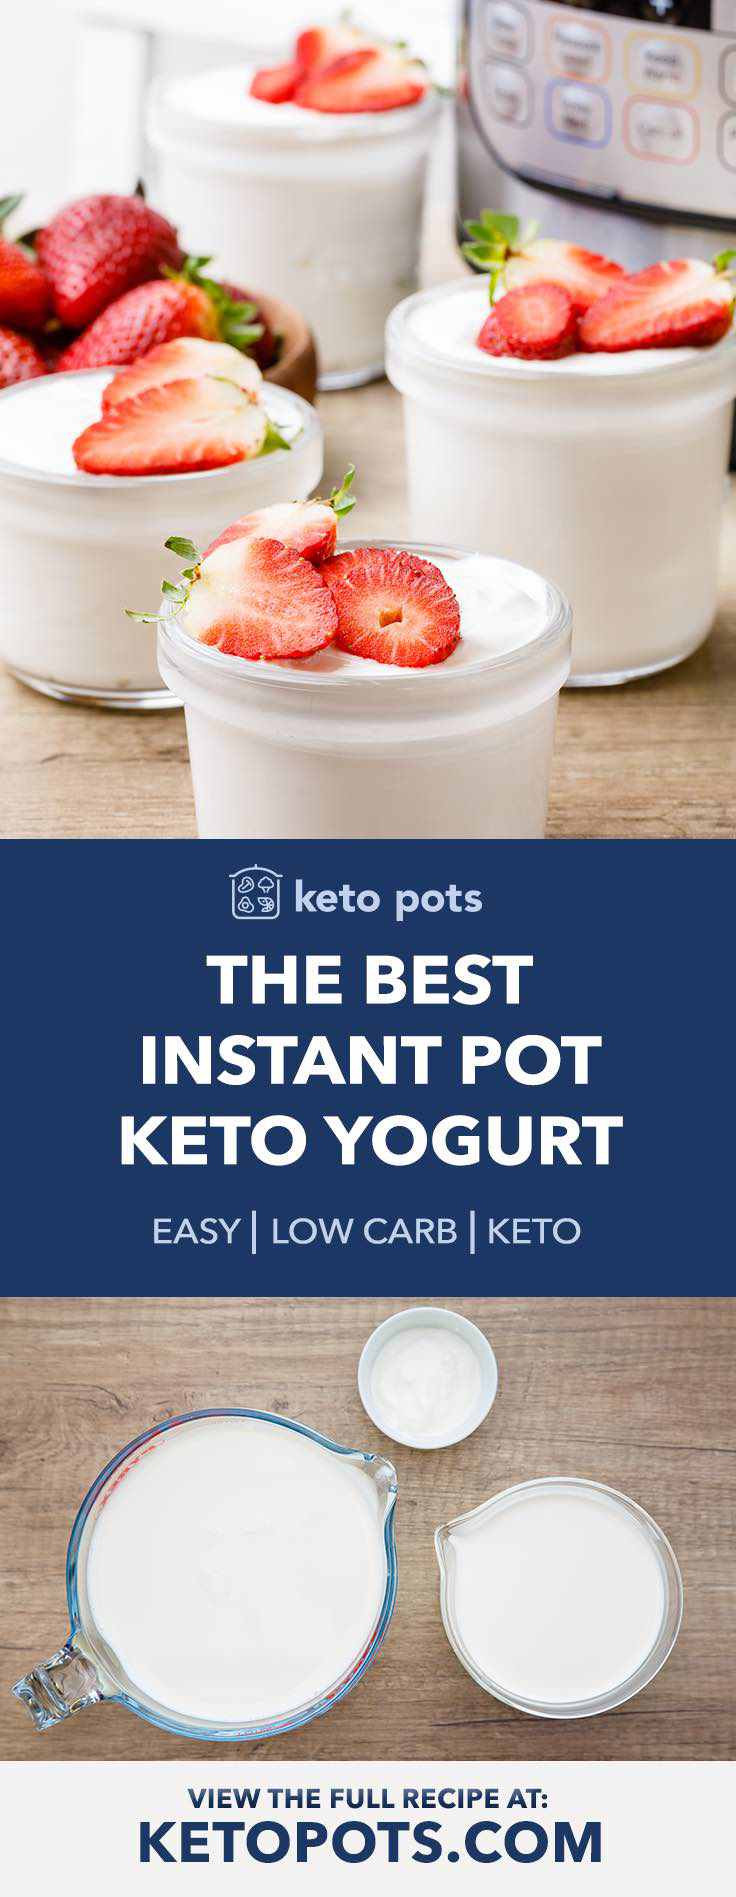 Instapot Keto Yogurt
 How to Make the Best Instant Pot Keto Yogurt The Easy Way